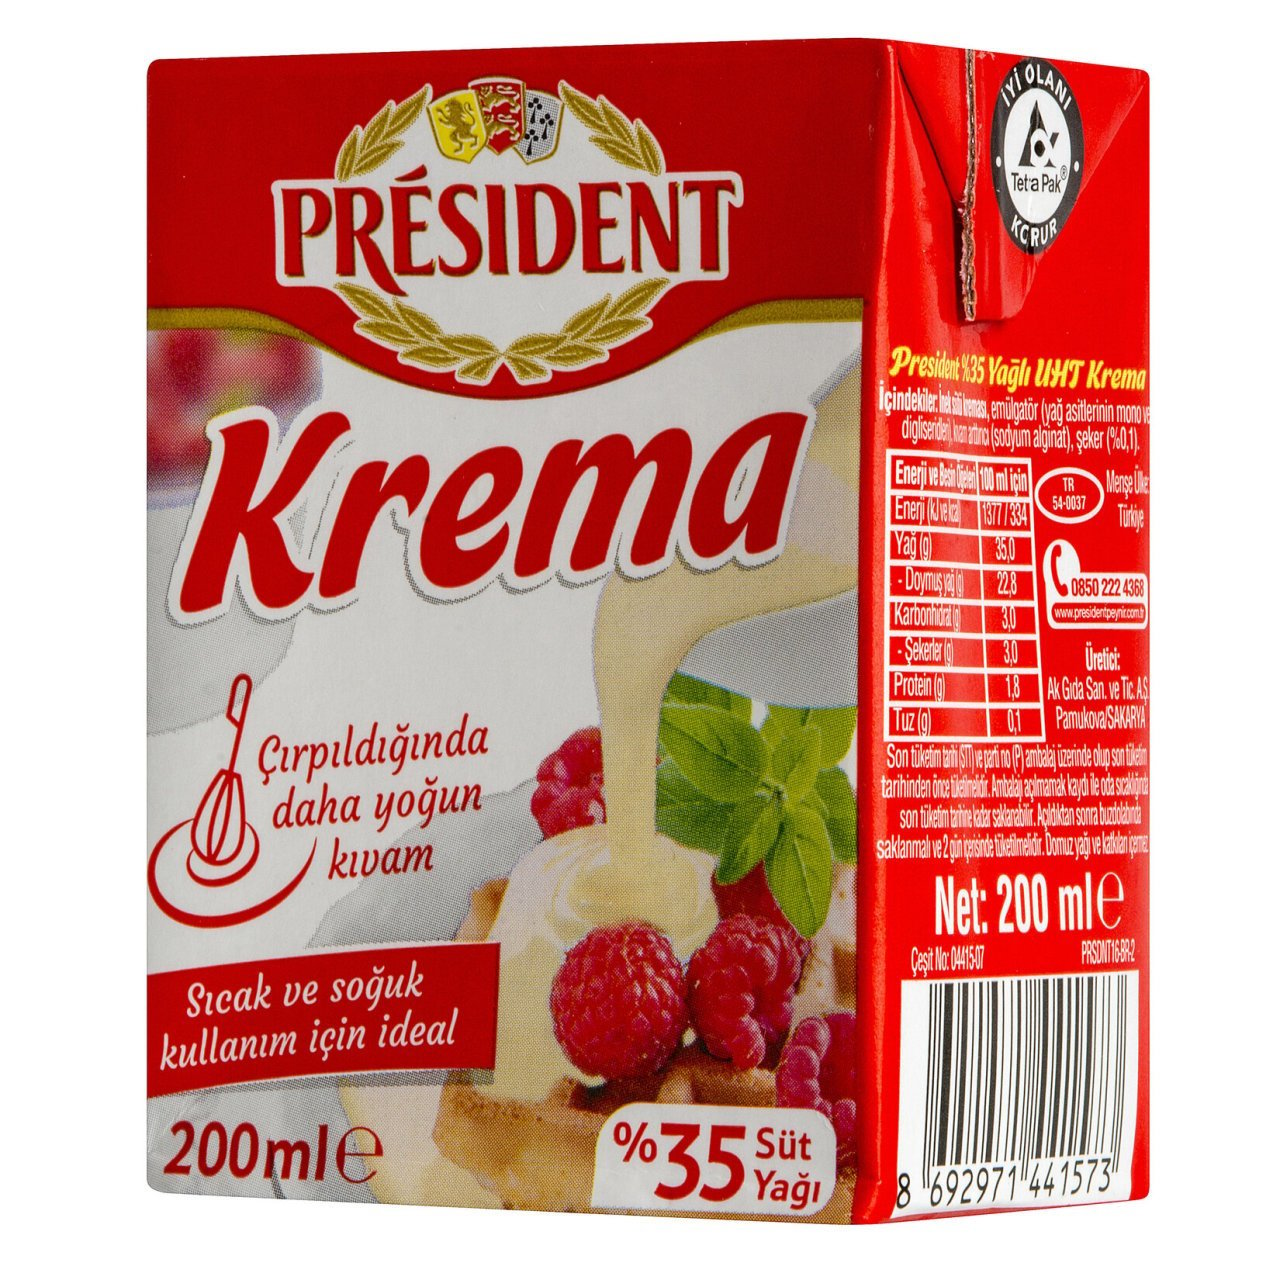 President Krema 200ml